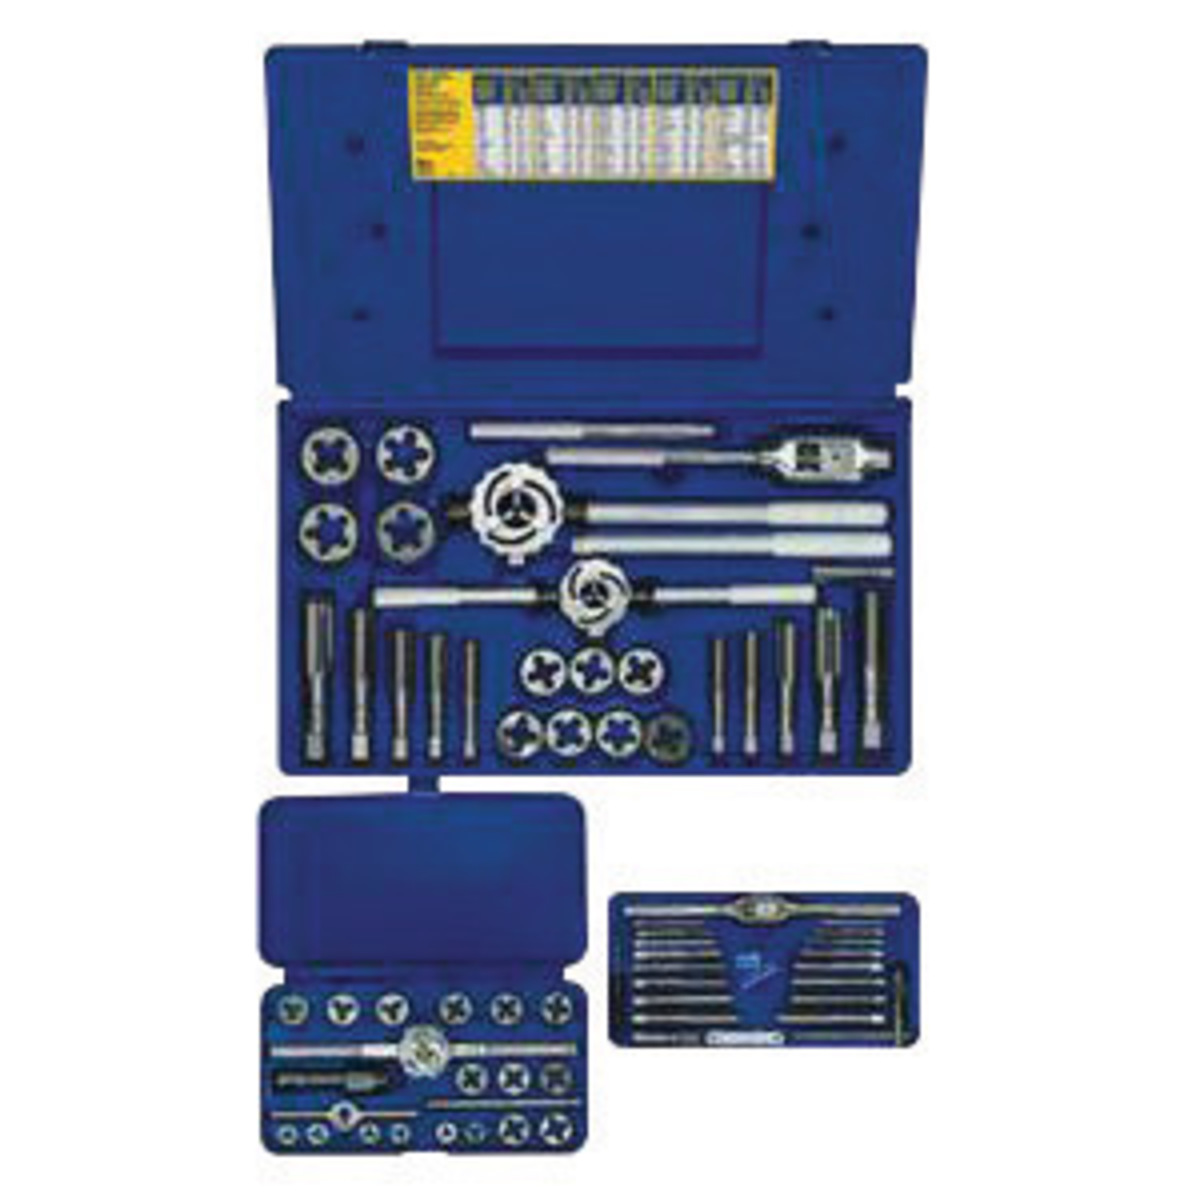 IRWIN 1109 HCS Plug Tap 3-56 NF BULK for sale online